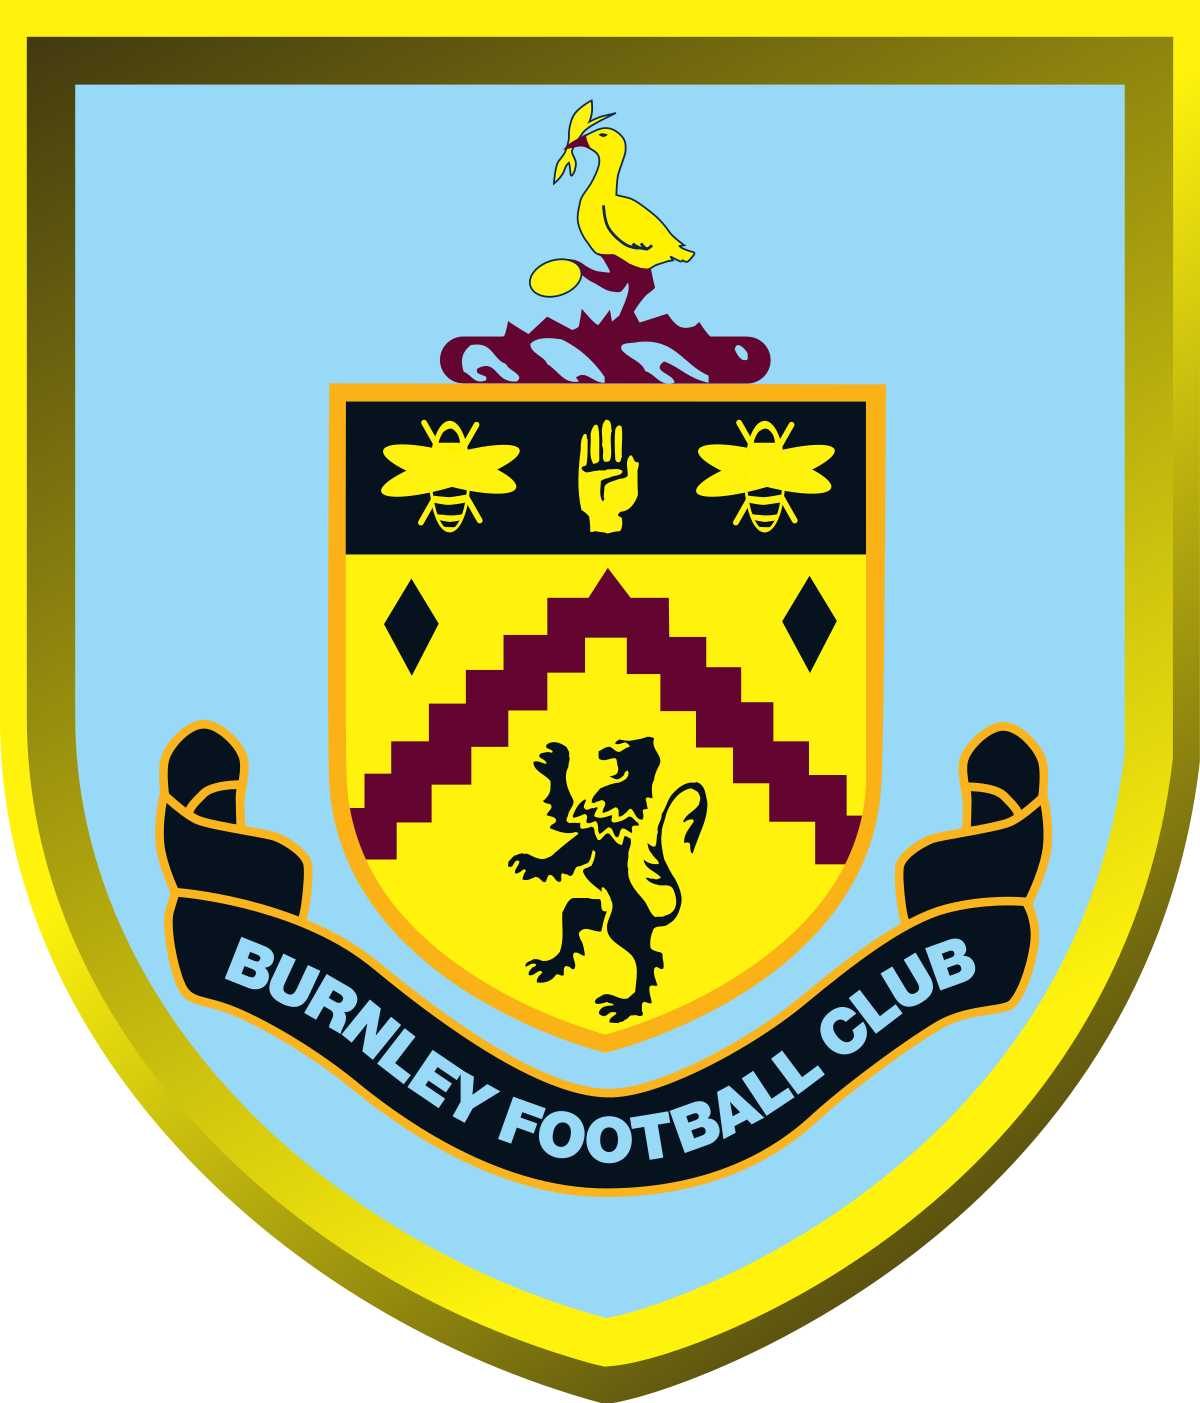 Burnley W logo